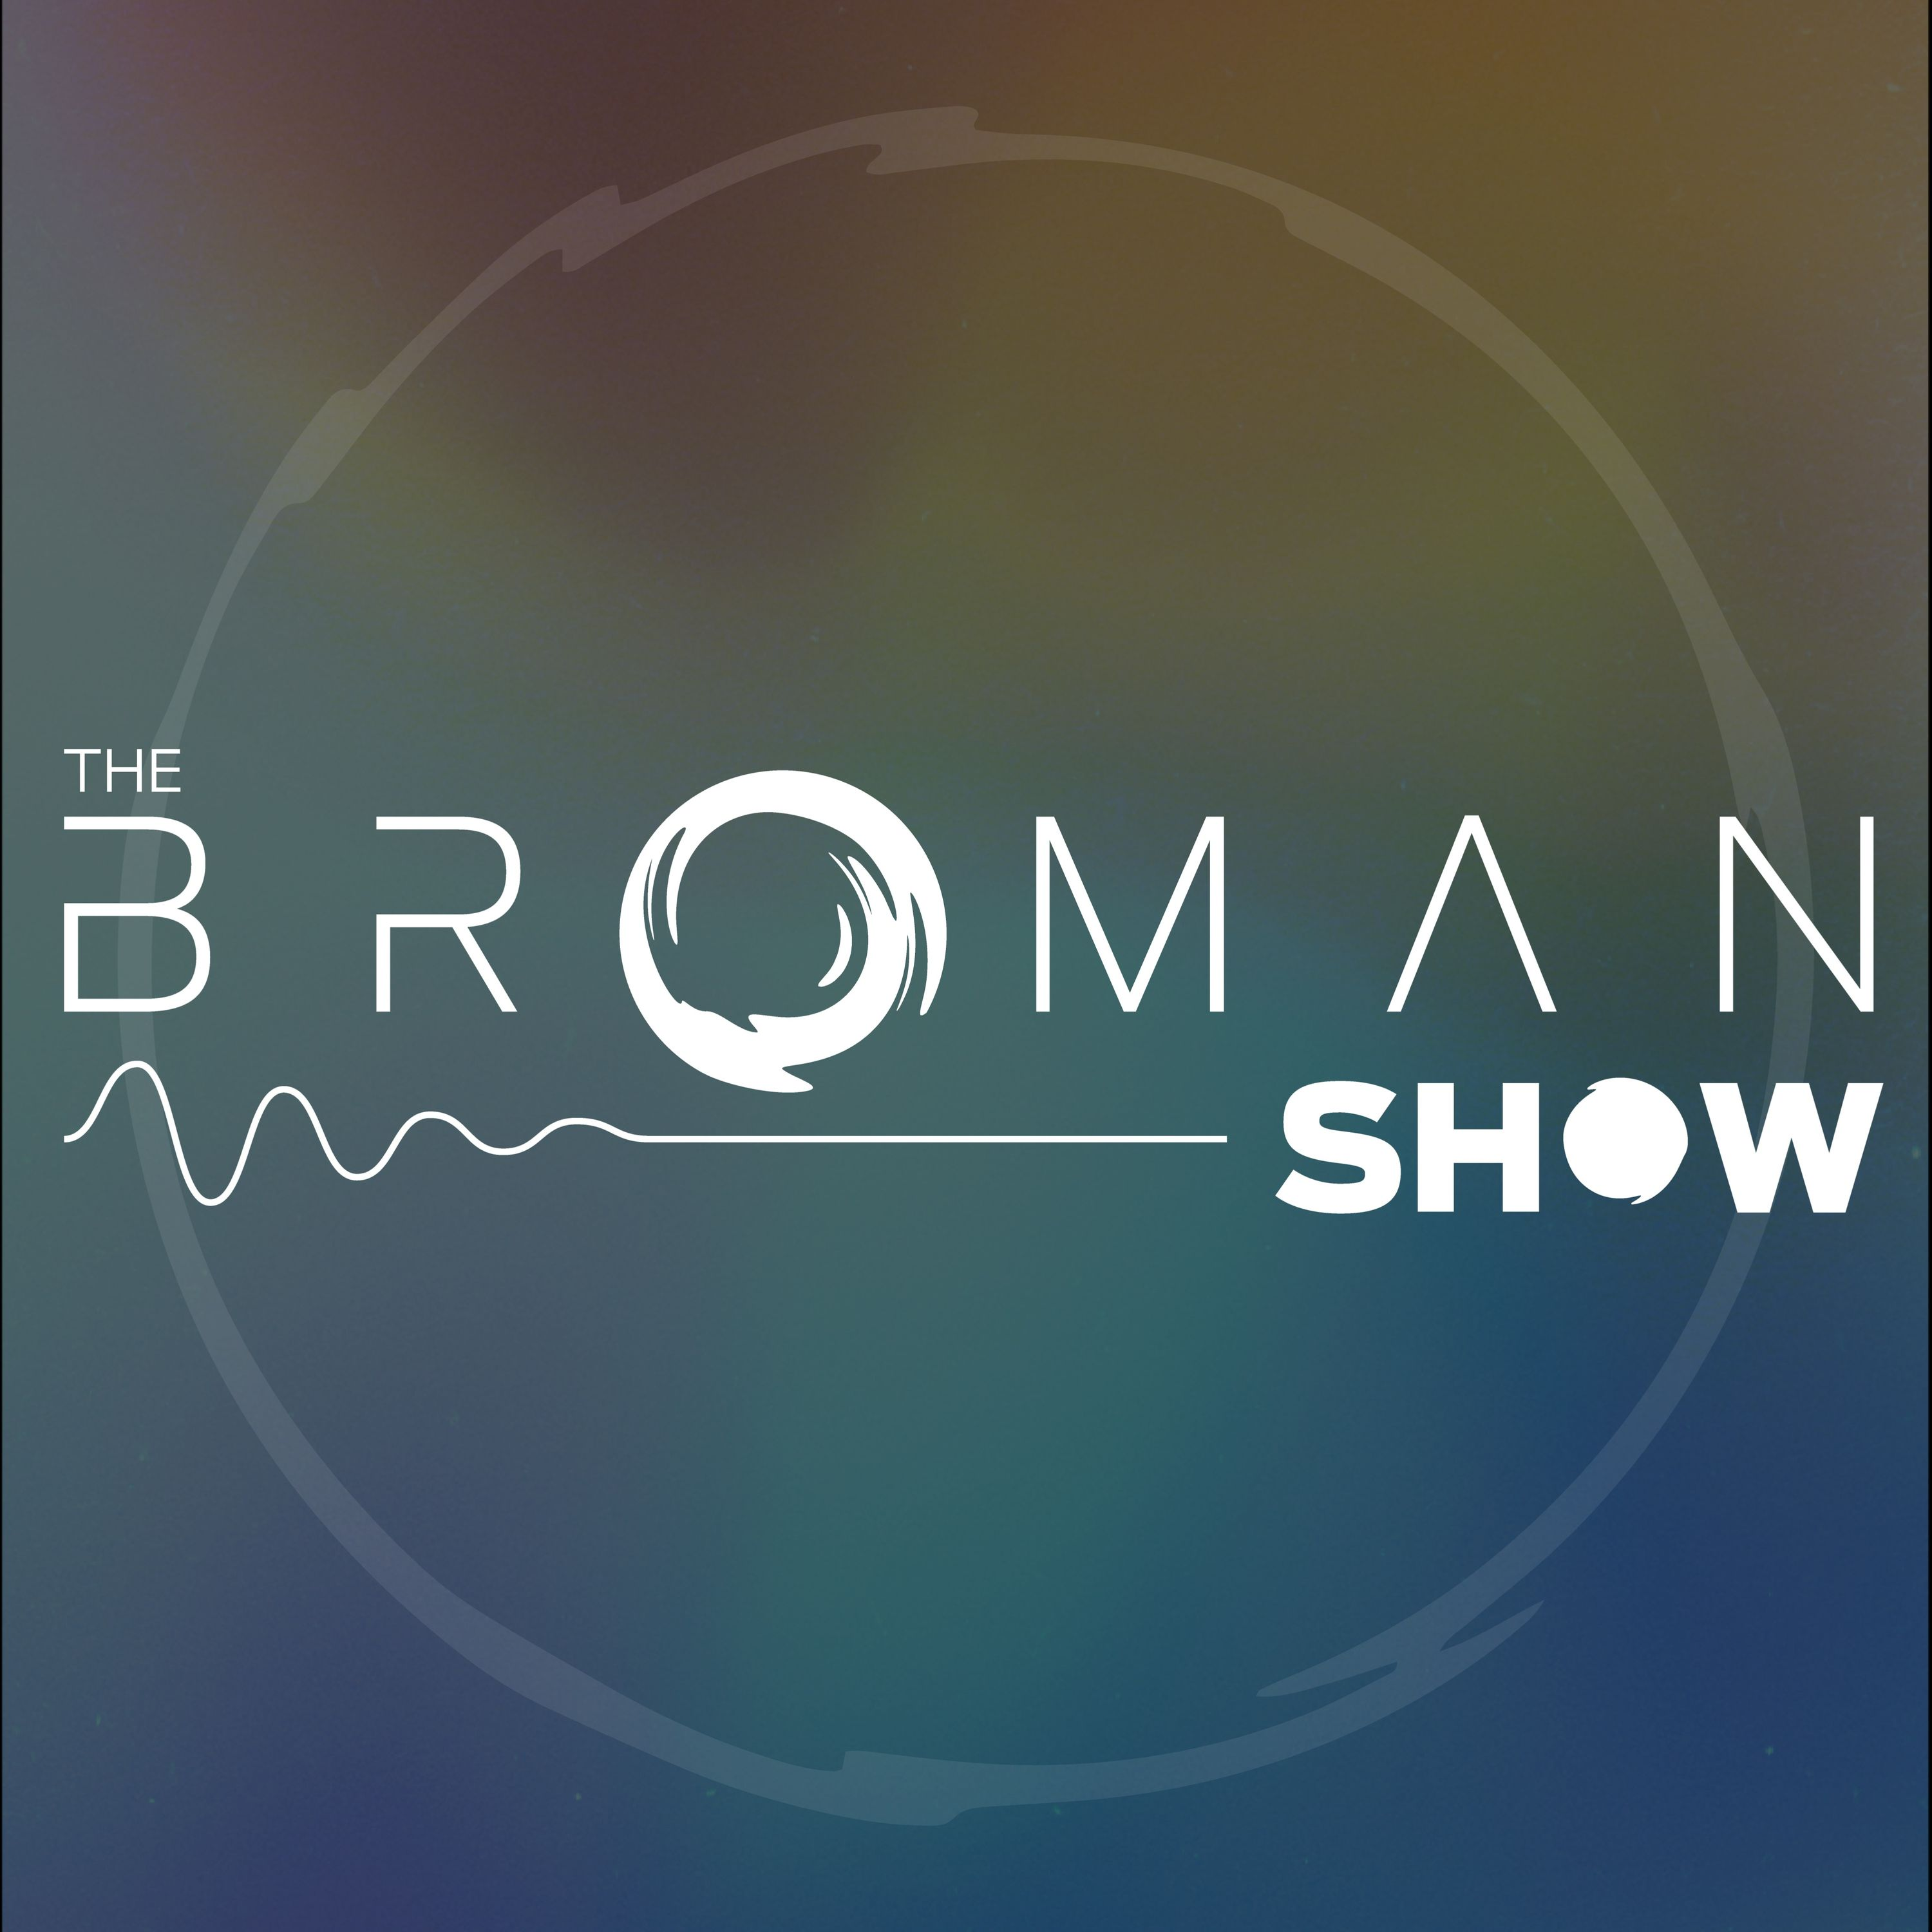 The Broman Show